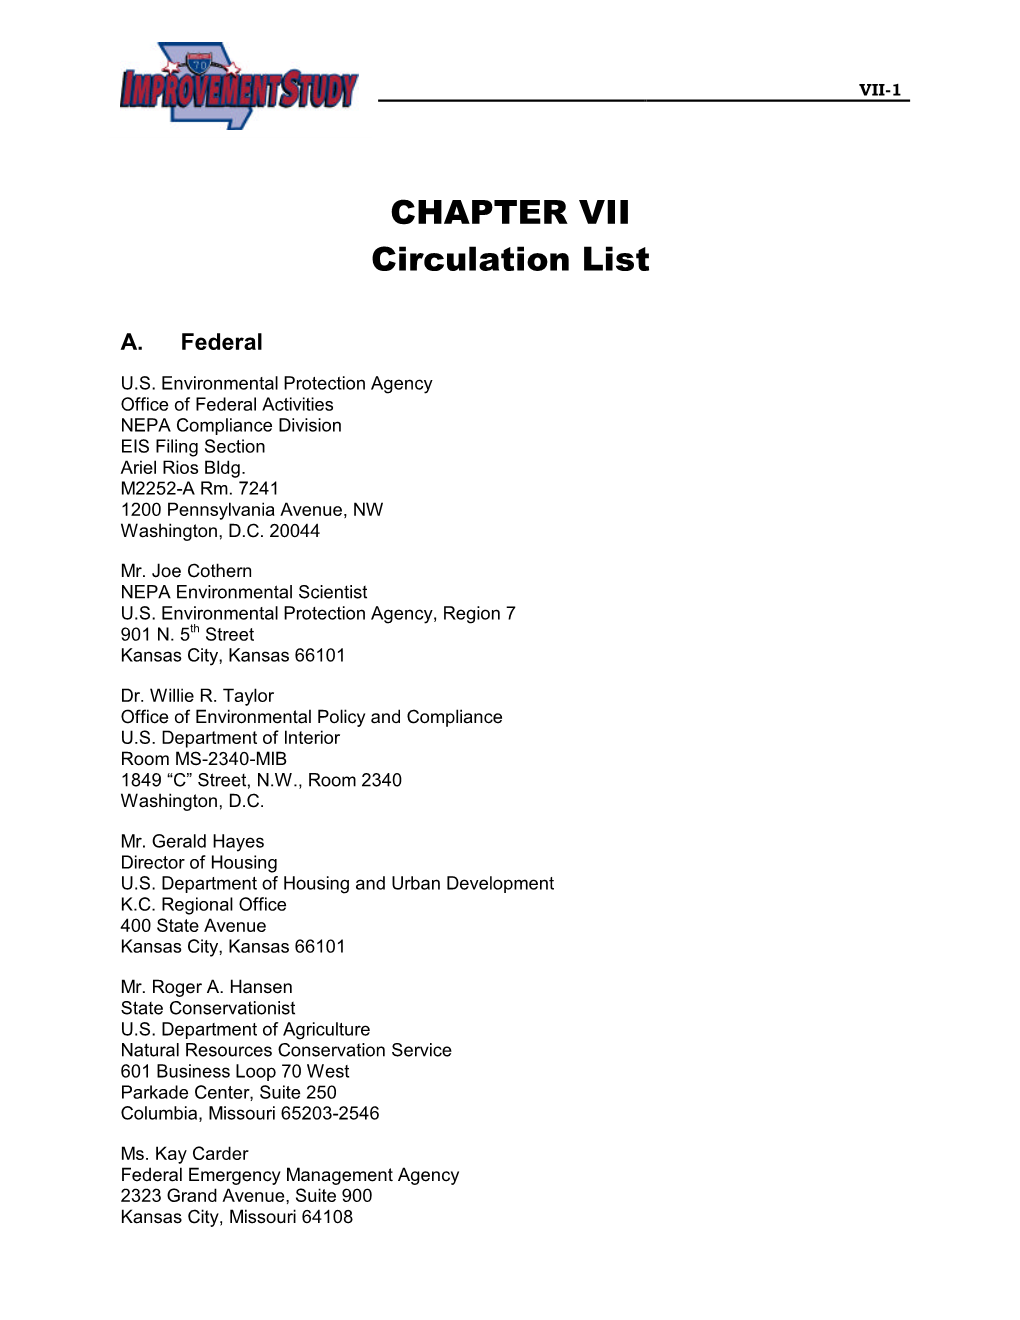 CHAPTER VII Circulation List